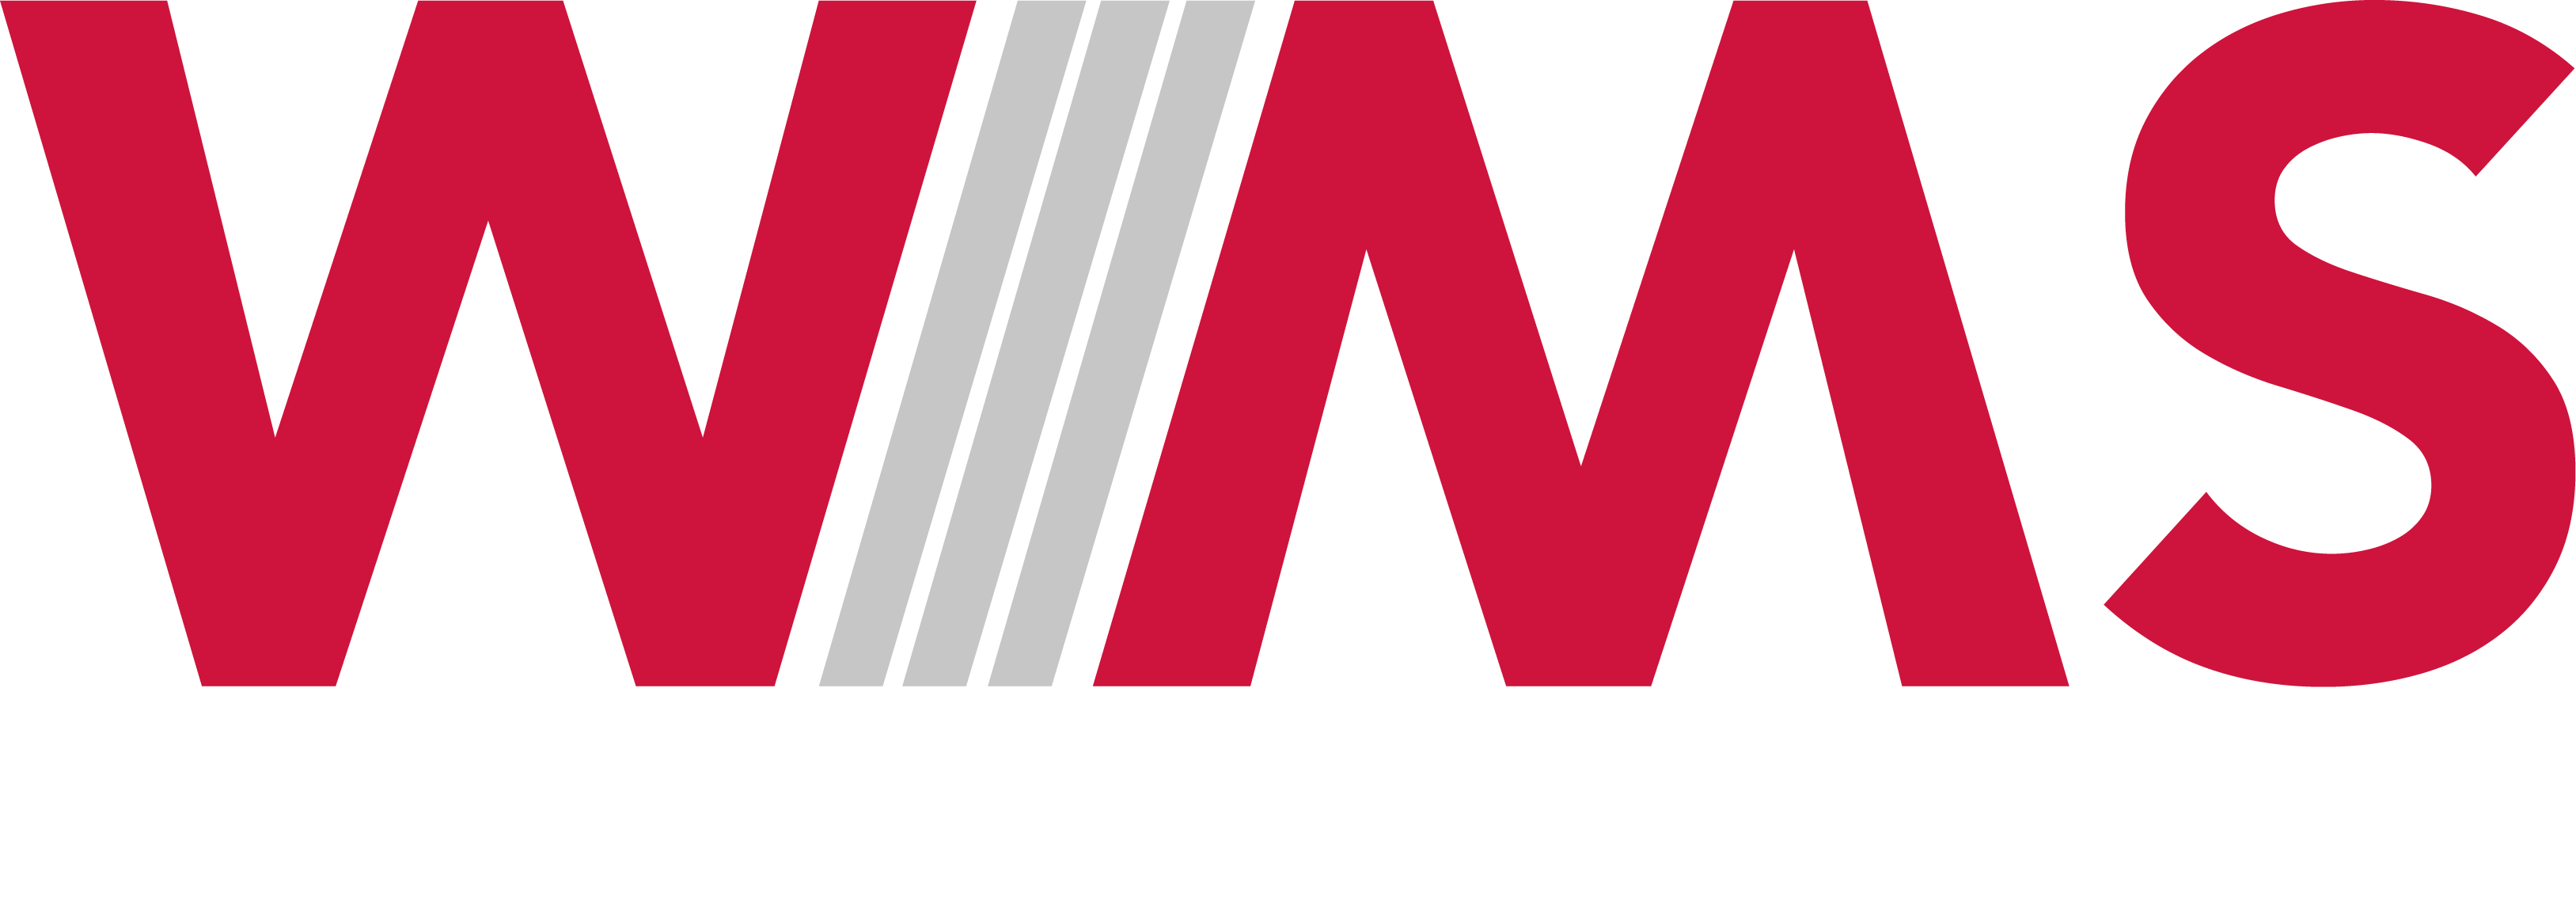 WMS Walter Meile GmbH Logo